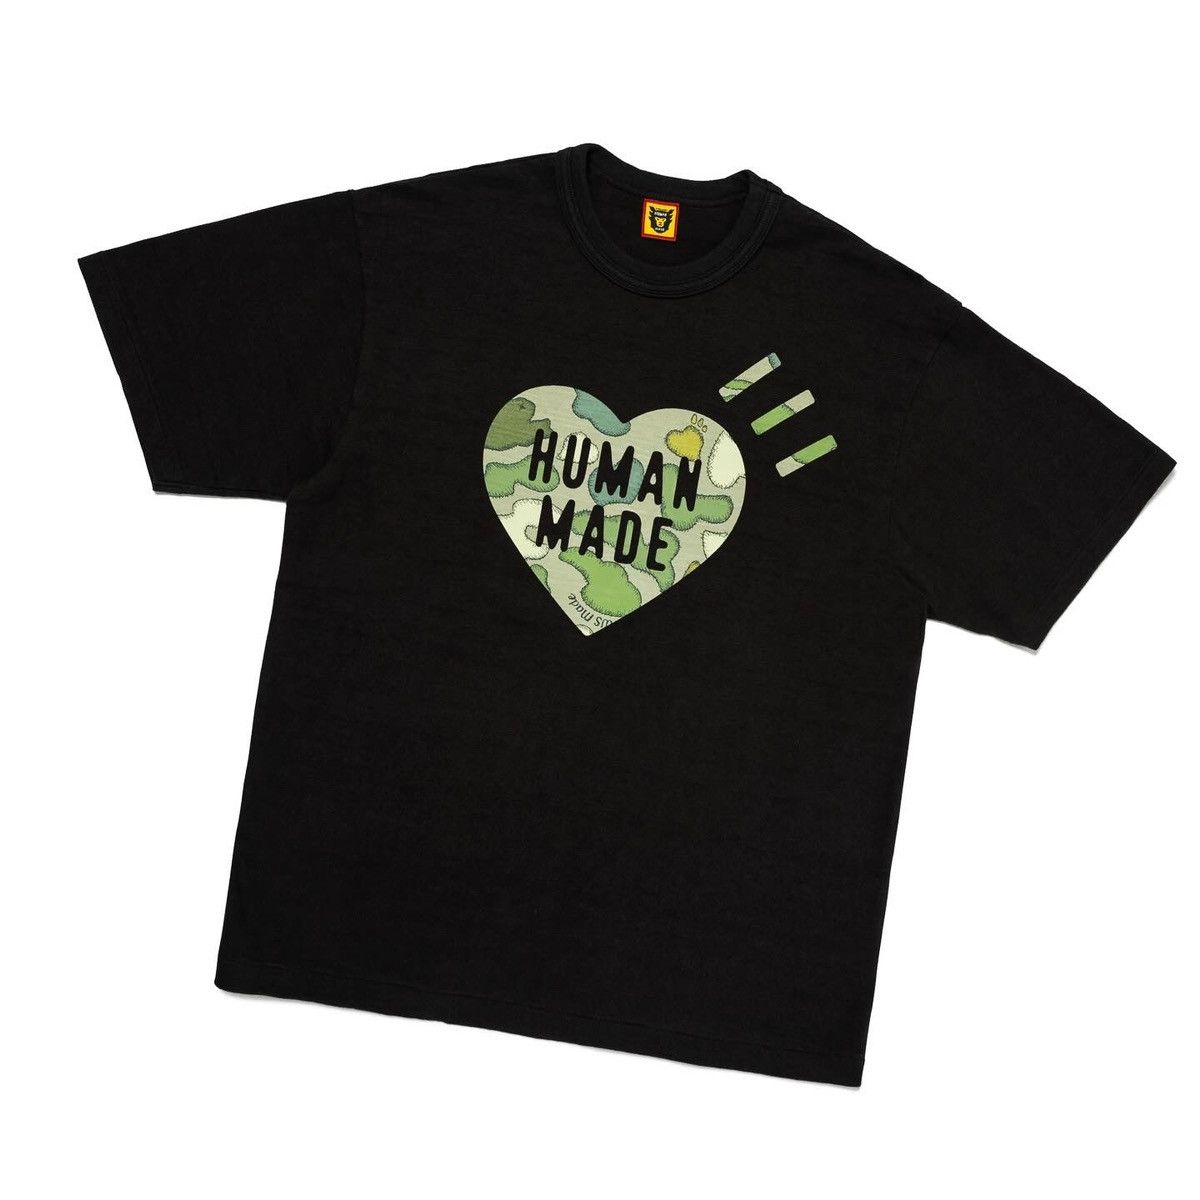 Human Made 🔥KAWS MADE GRAPHIC T-SHIRT #1 | Grailed